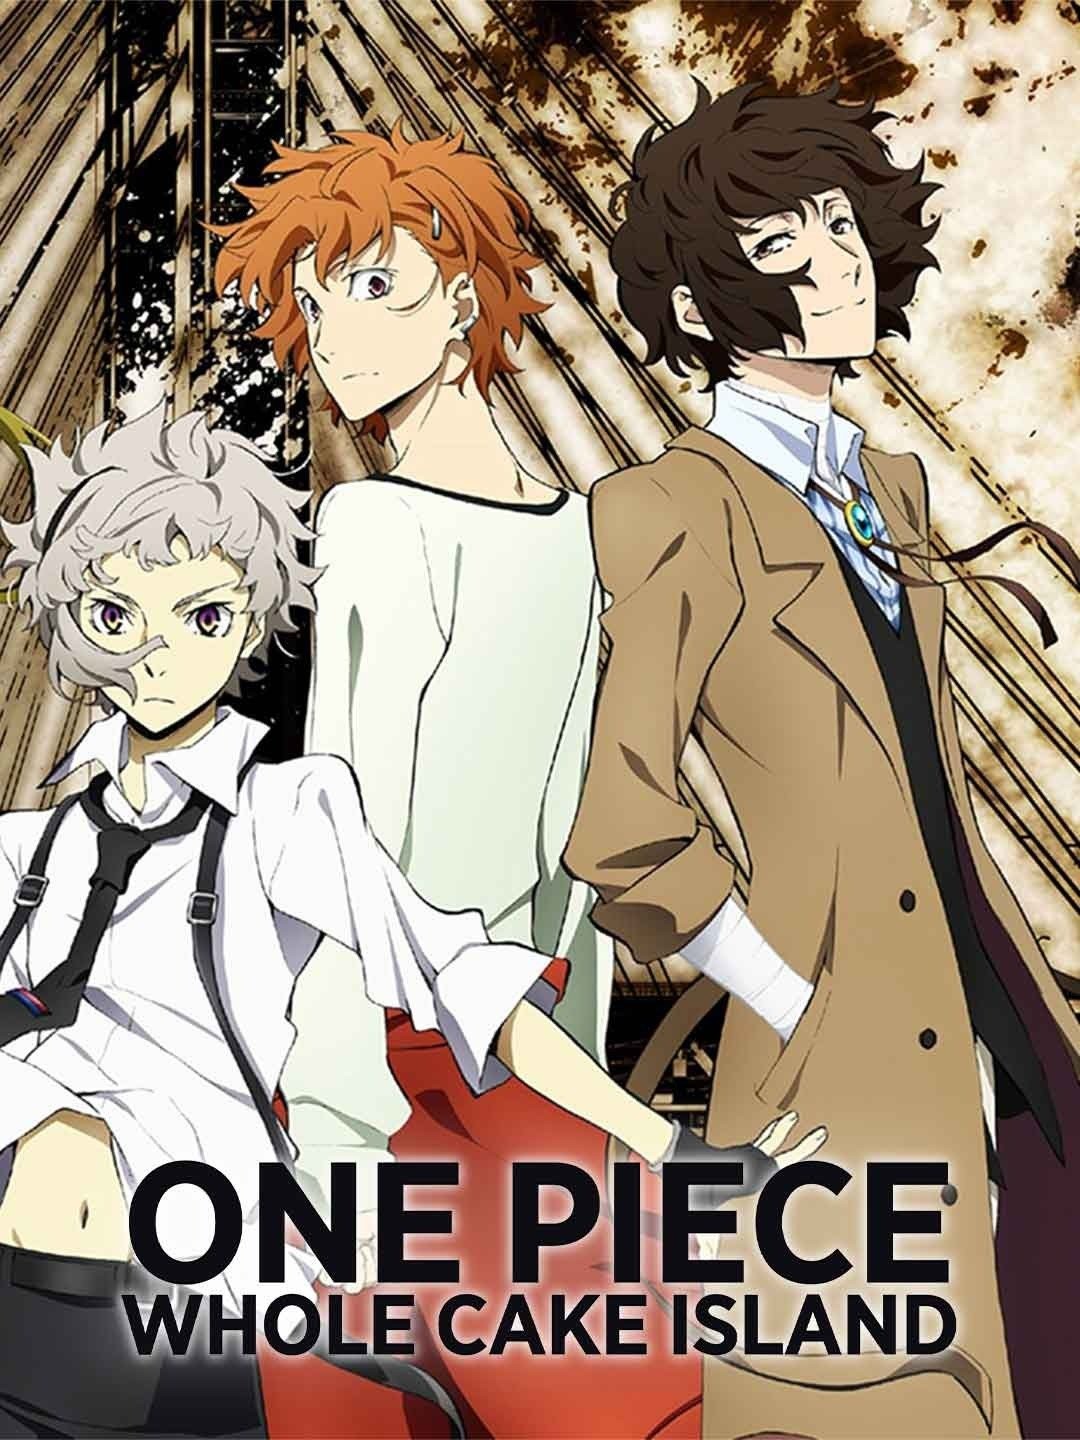 One Piece (season 19) - Wikipedia